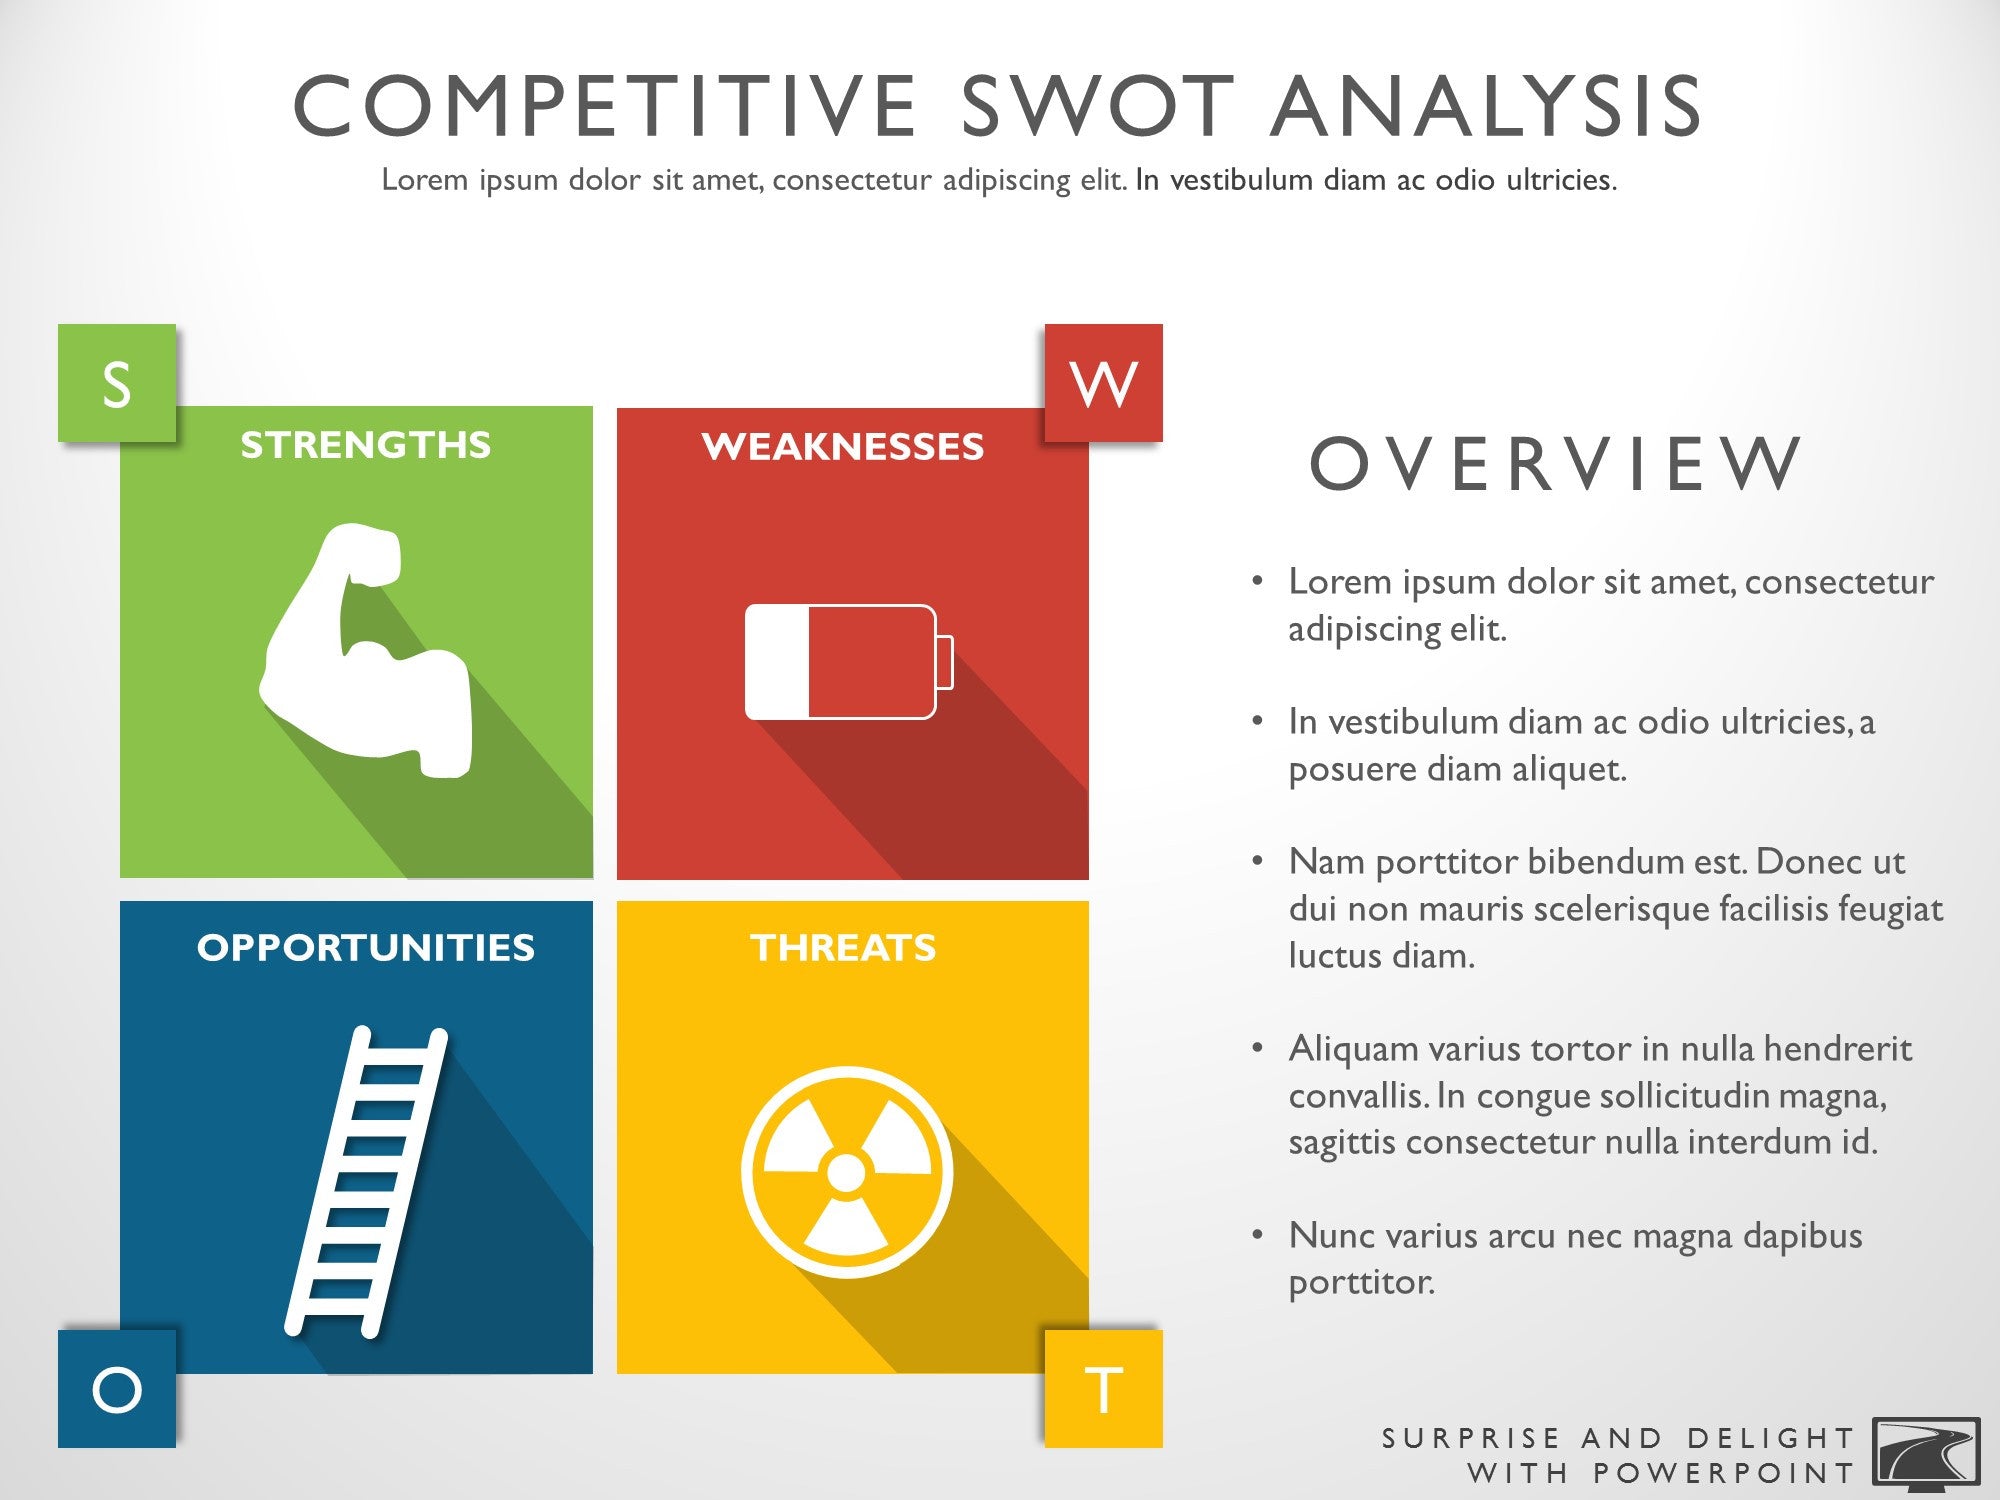 10+ Brand SWOT Analysis Templates - PDF